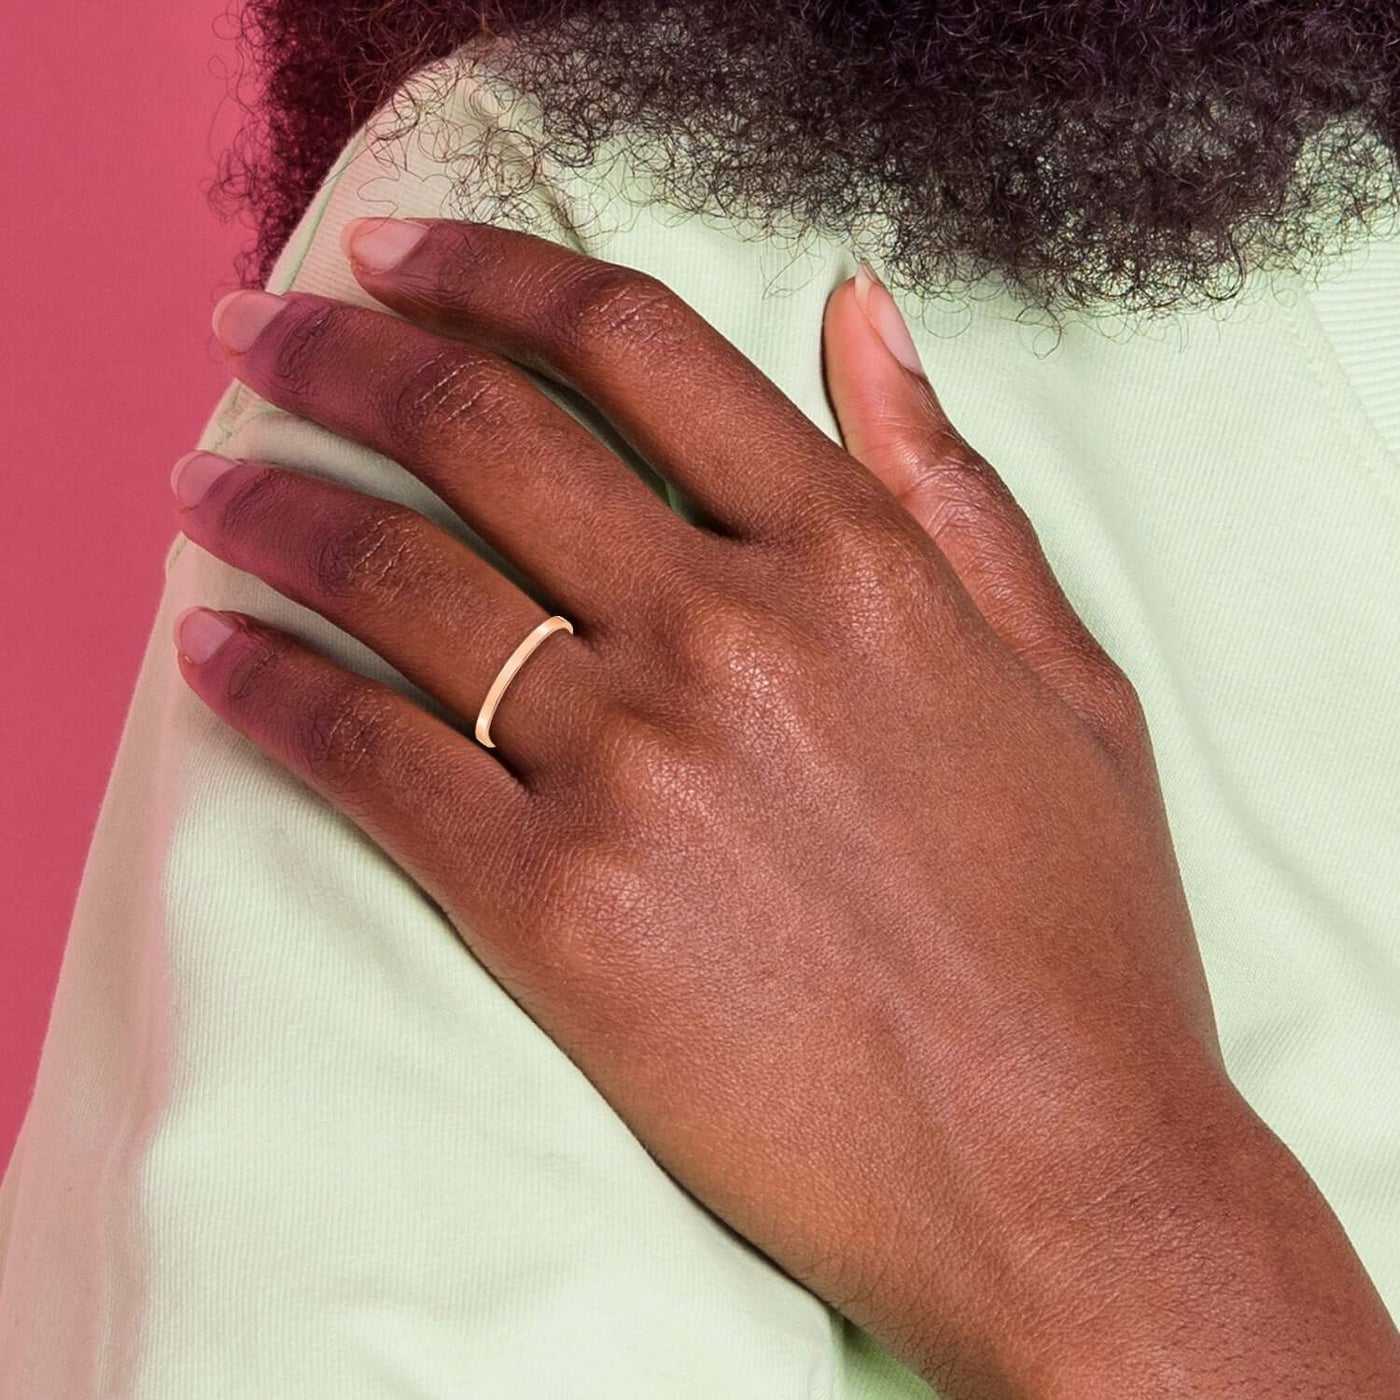 The Austin Gold Flat Wedding Ring | Lisa Robin